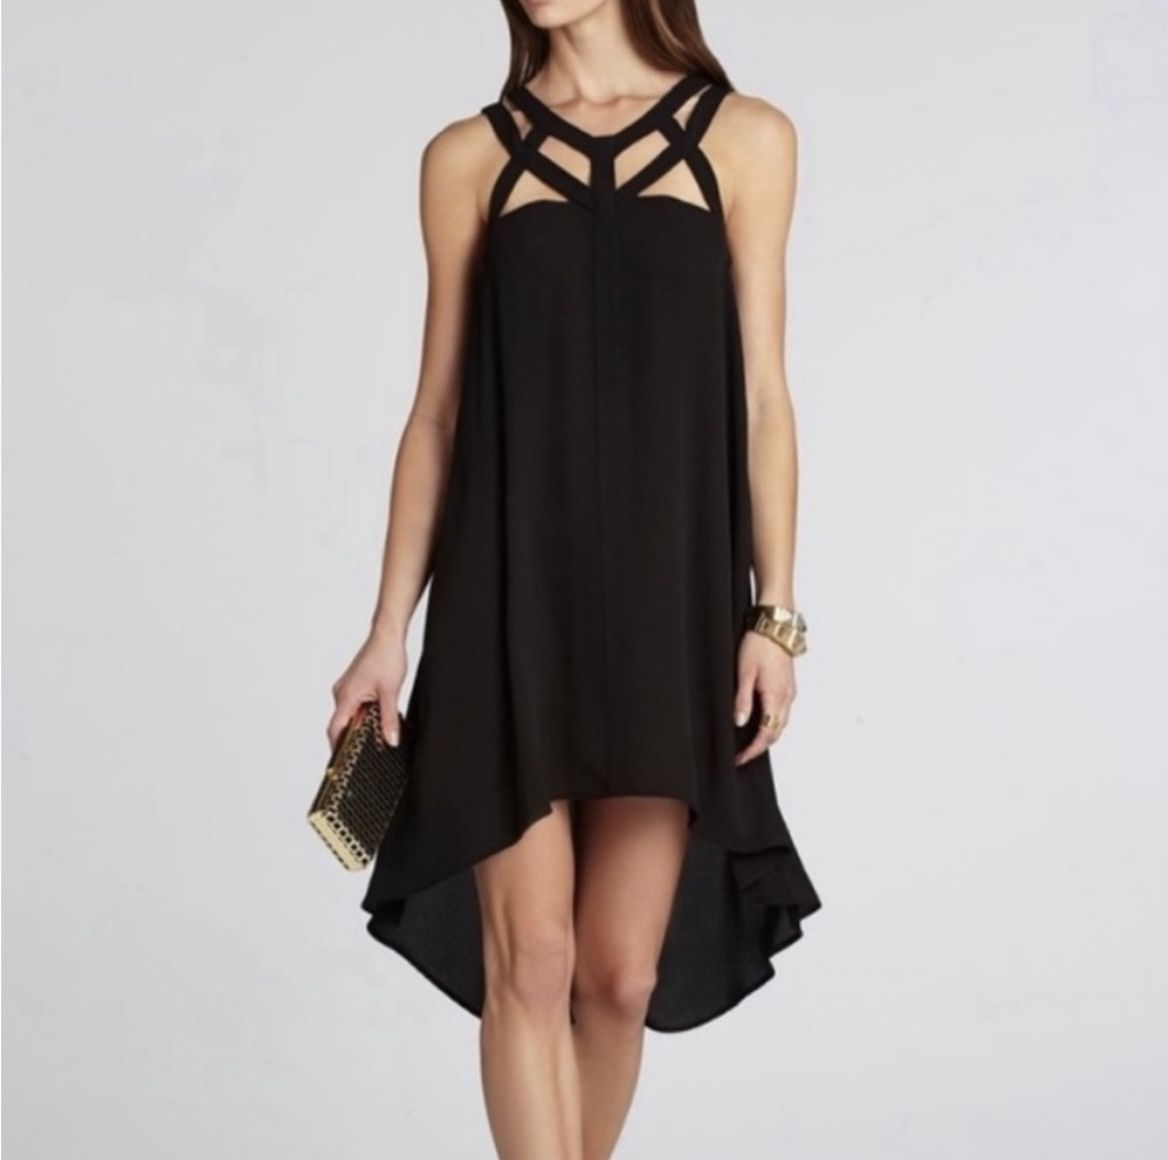 BCBGMAXAZRIA Babette Black Dress - Size Medium